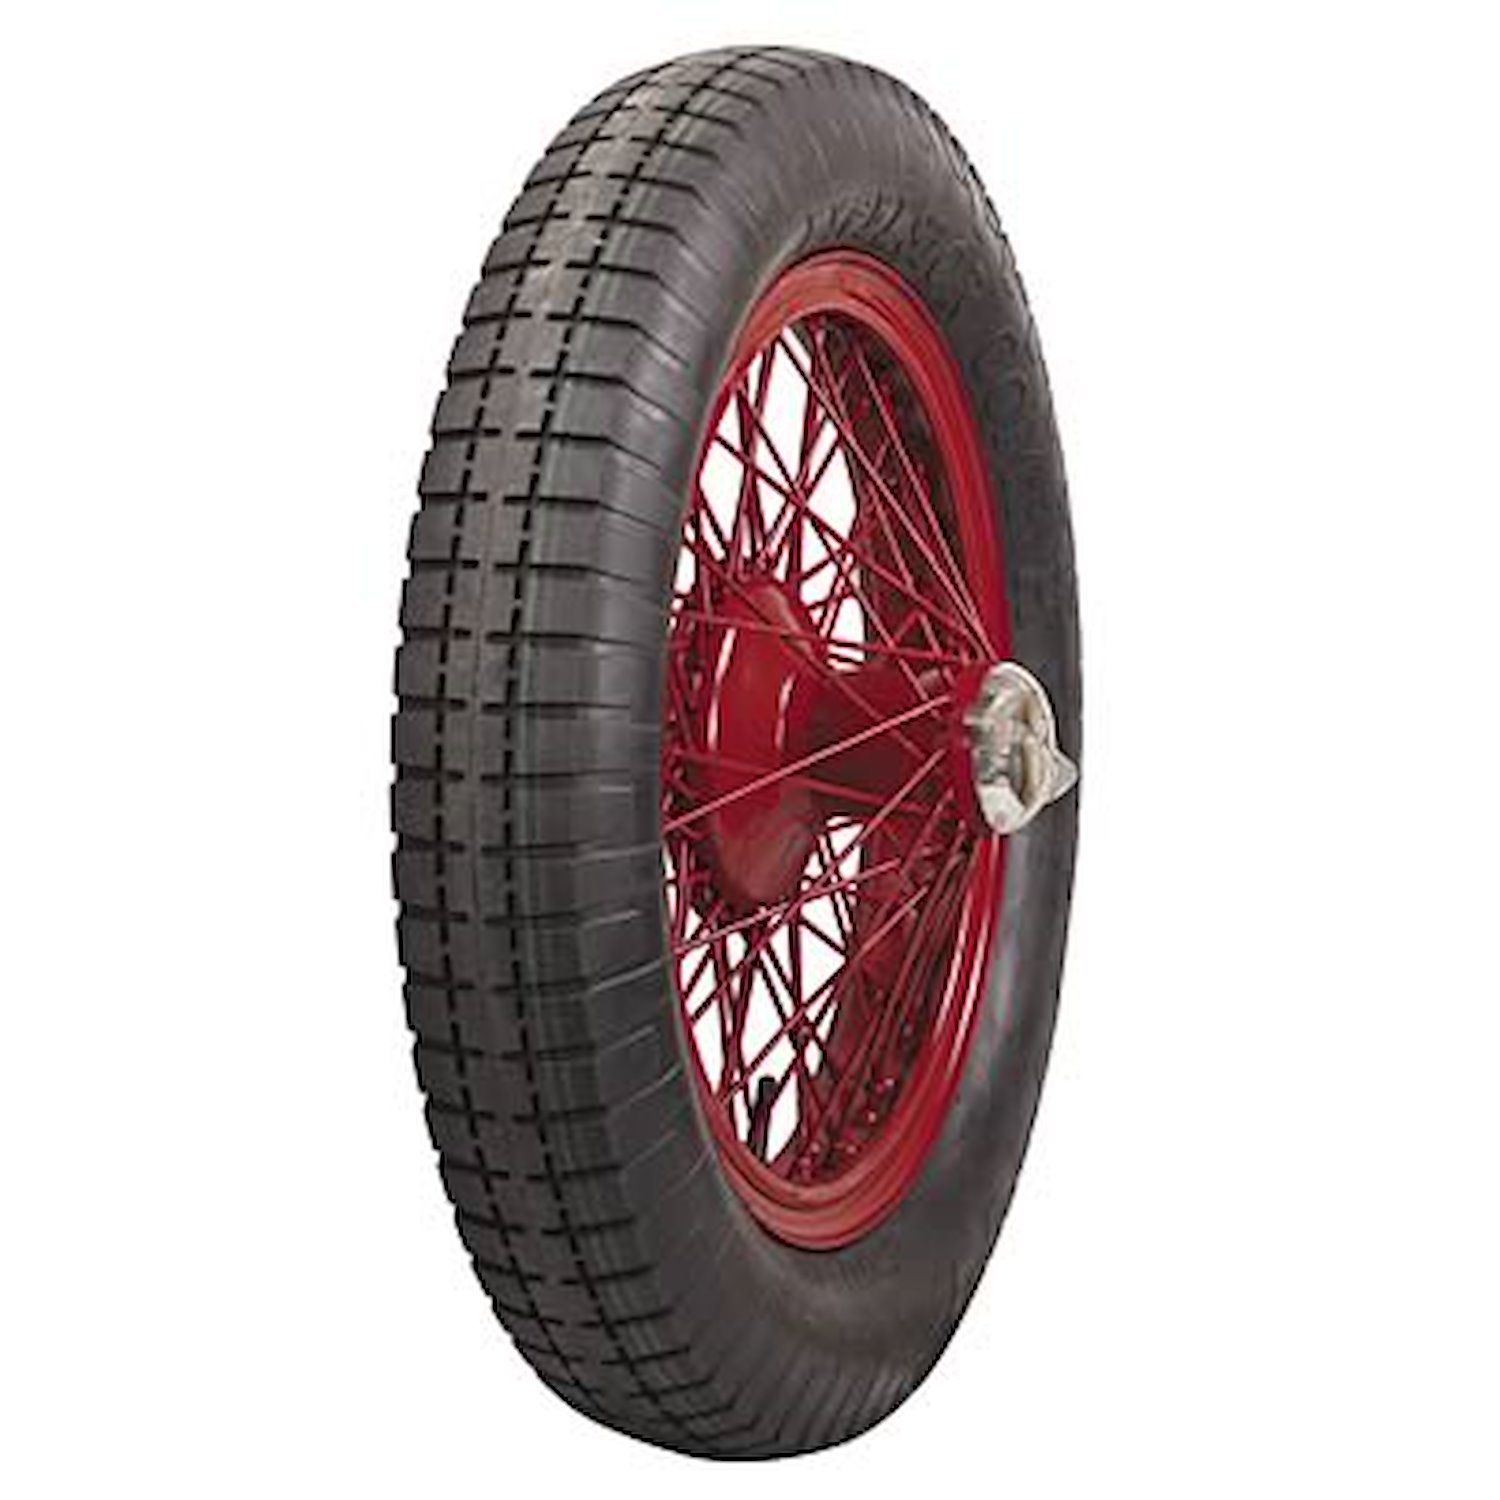 713855 Tire, Excelsior Comp H, 550-18